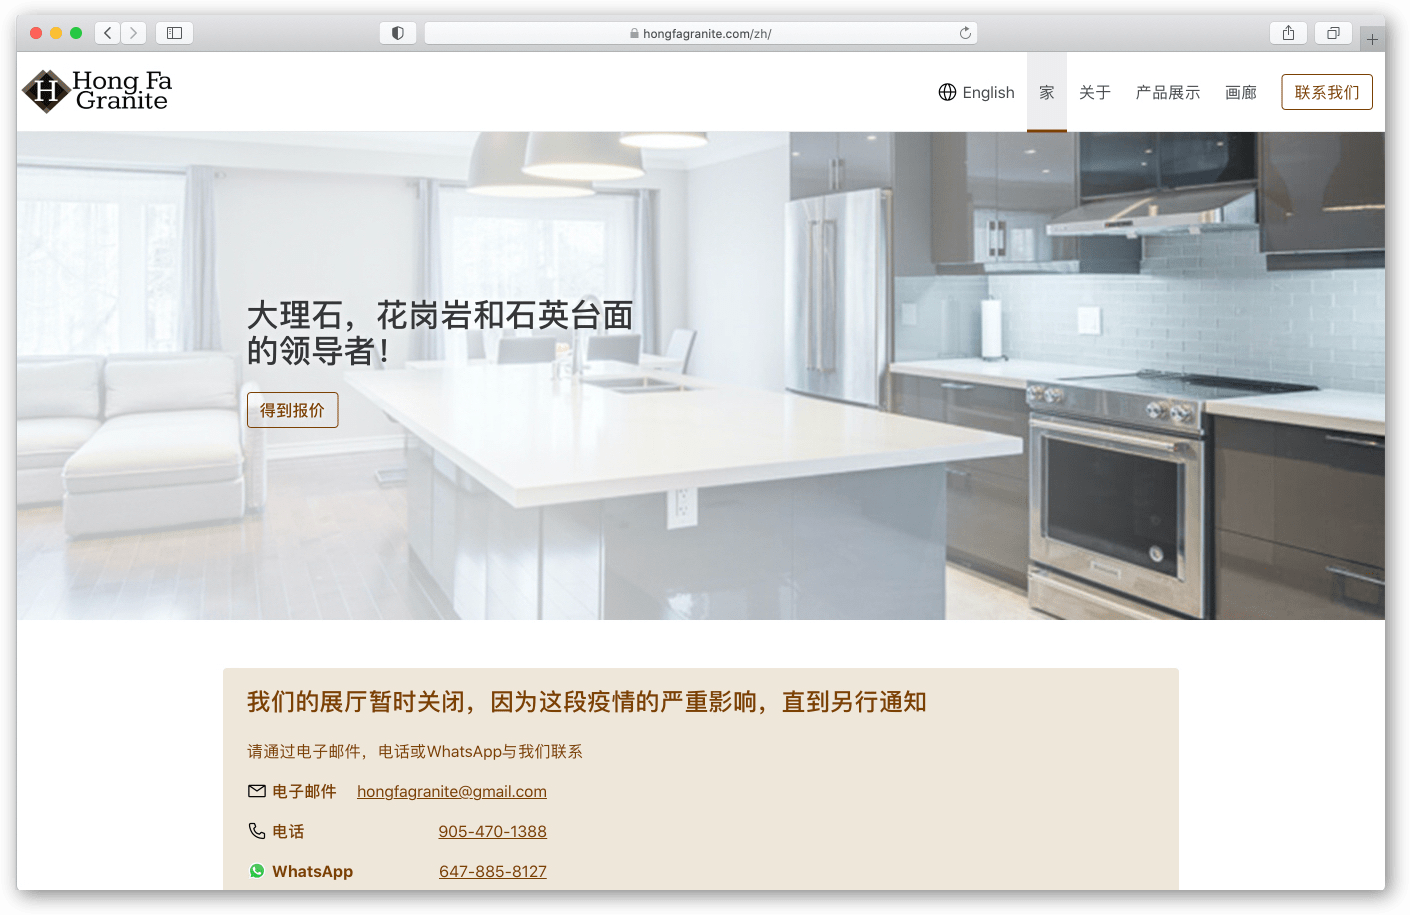 chinese home page of hong fa granite.com